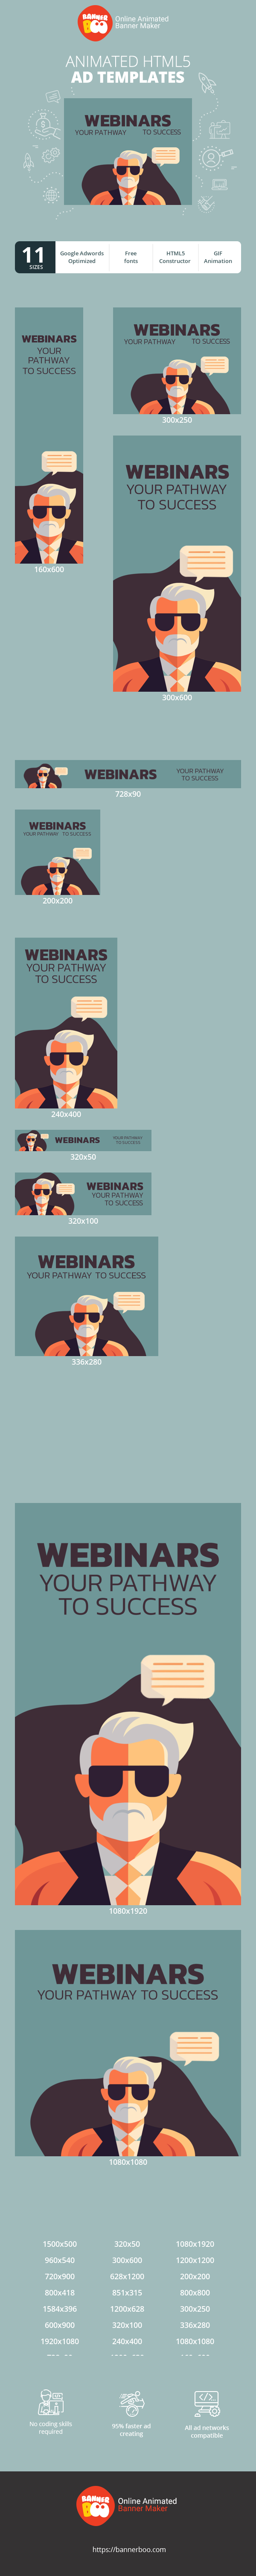 Szablon reklamy banerowej — Webinars — Your Pathway To Success